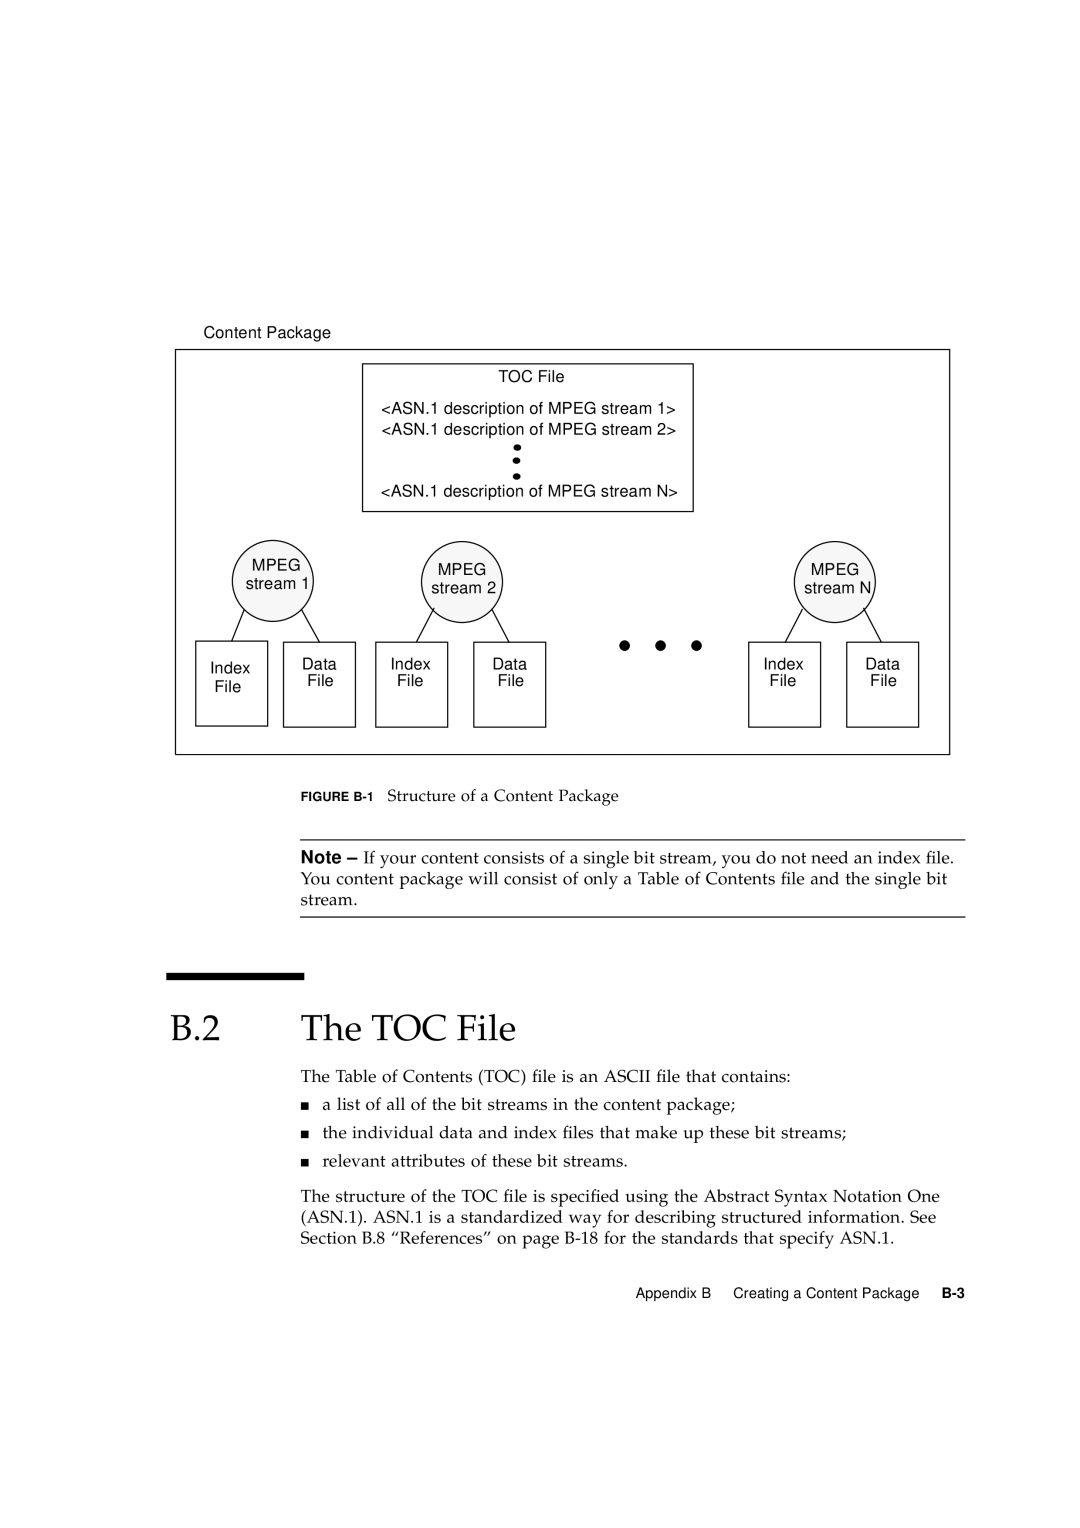 Sun Microsystems 2.1 manual B.2 The TOC File 